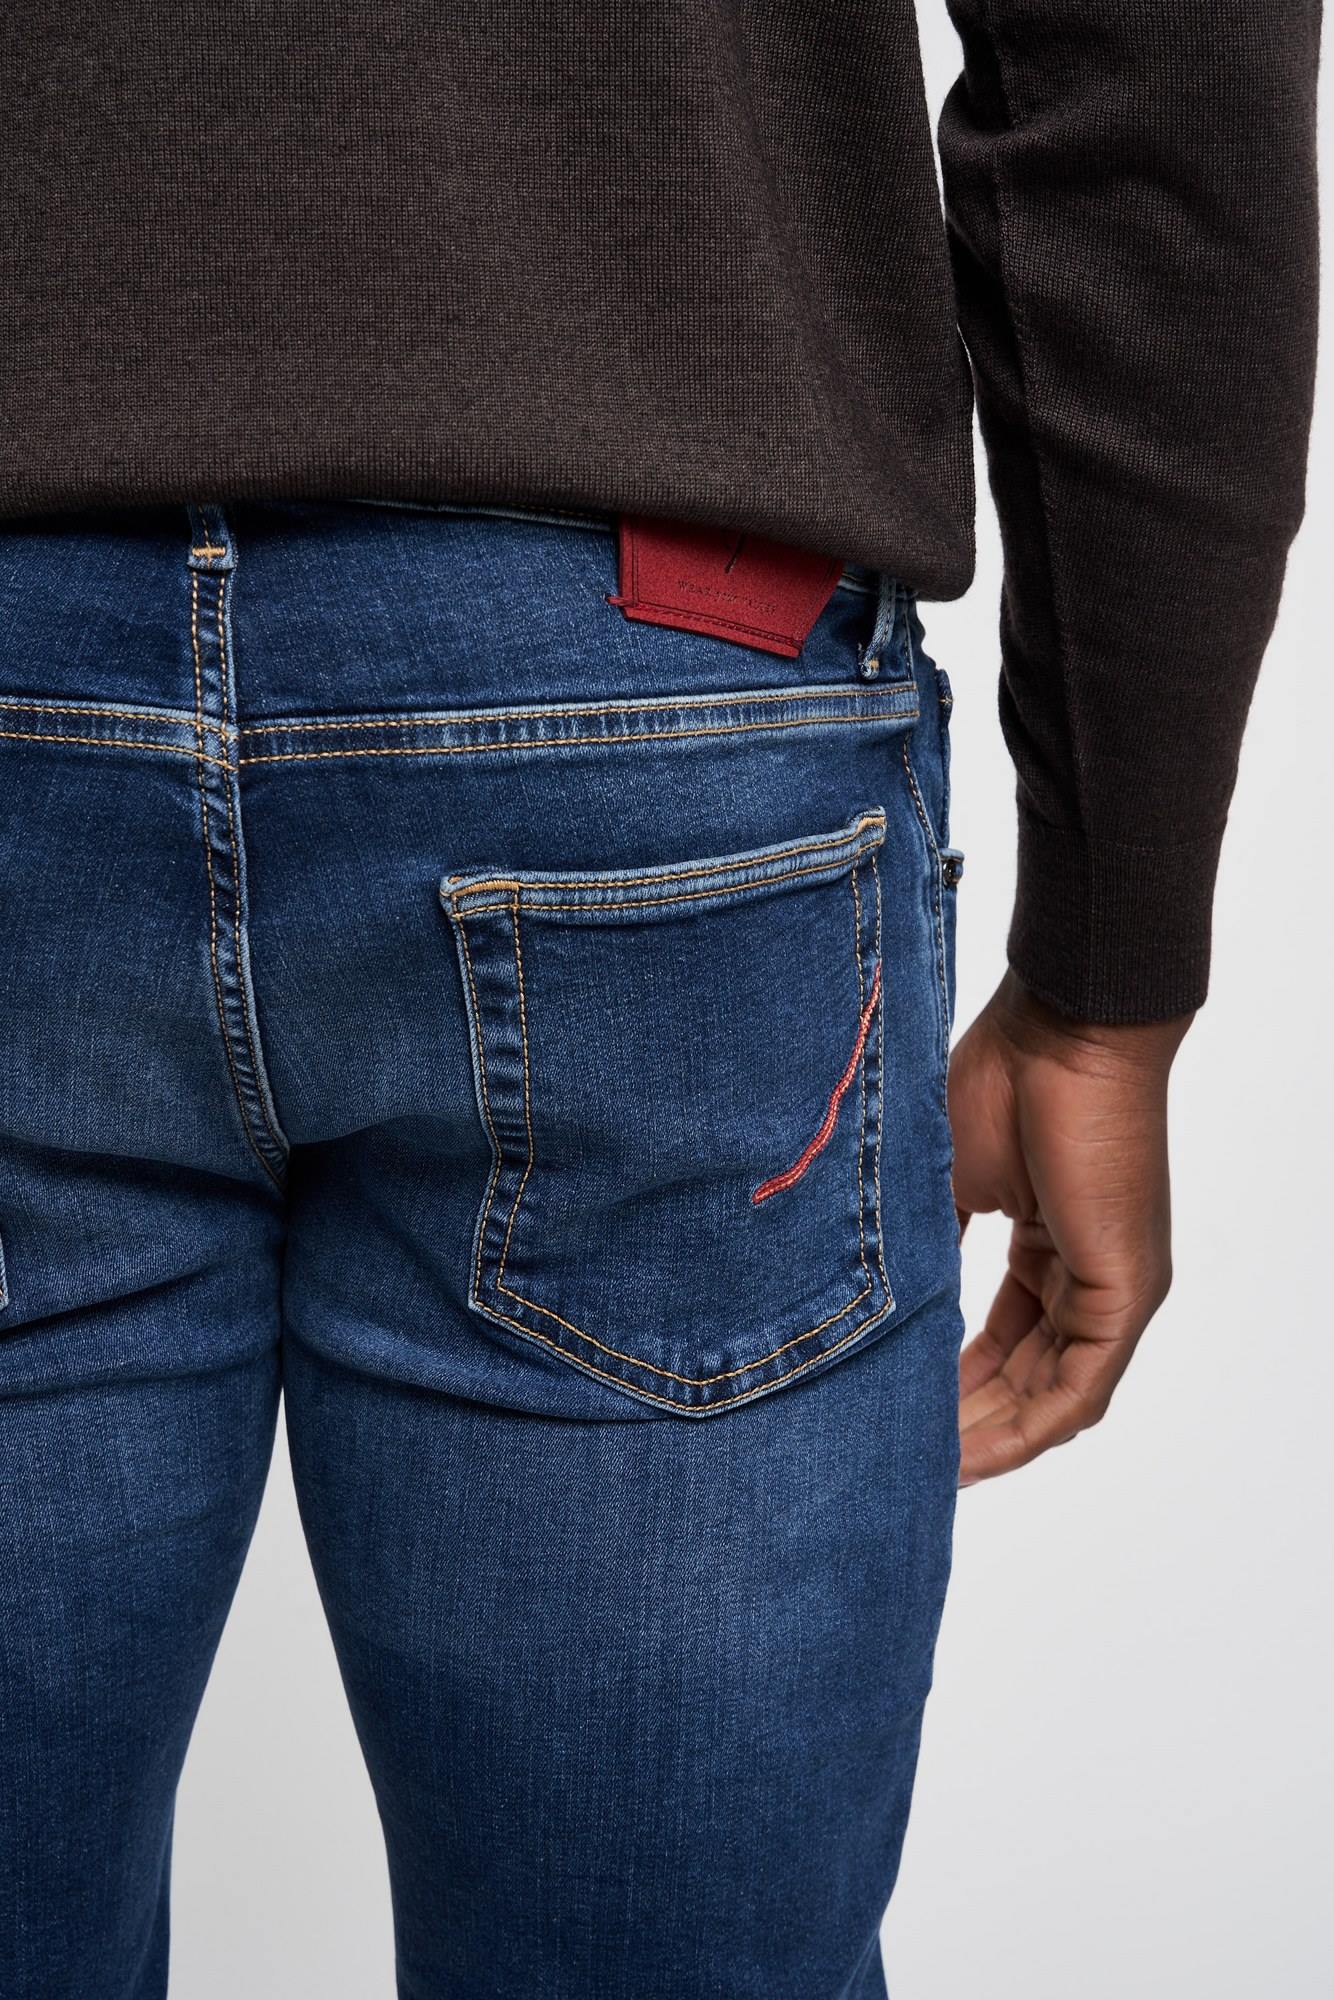 Handpicked Jeans Orvieto in Blue Cotton-4